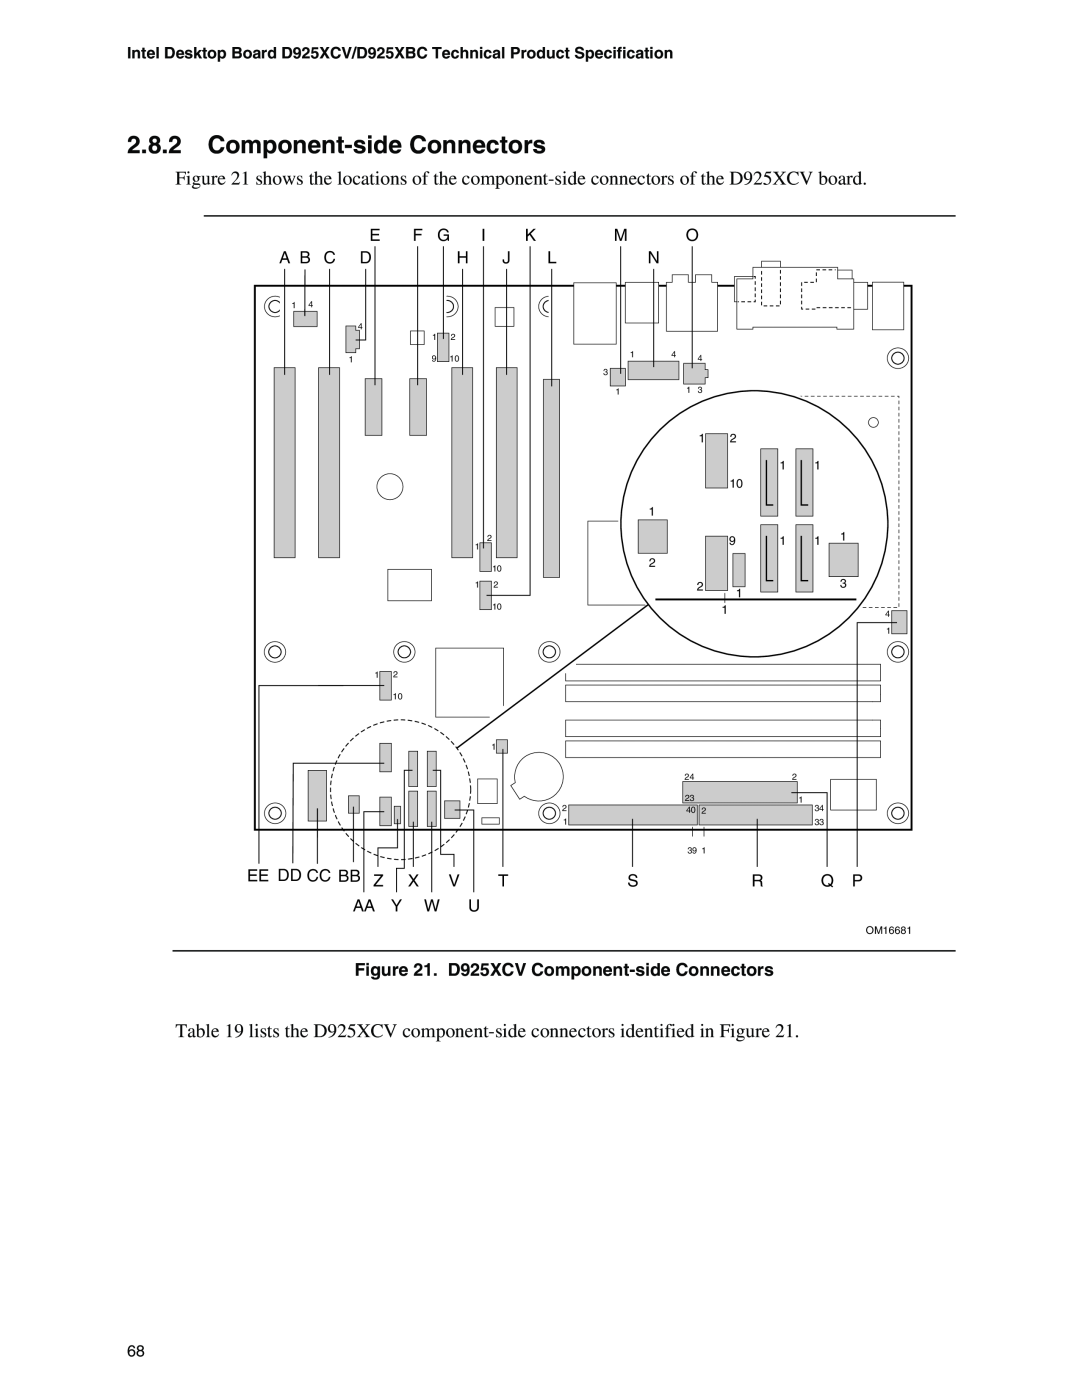 Intel D925XBC specifications D925XCV Component-side Connectors 